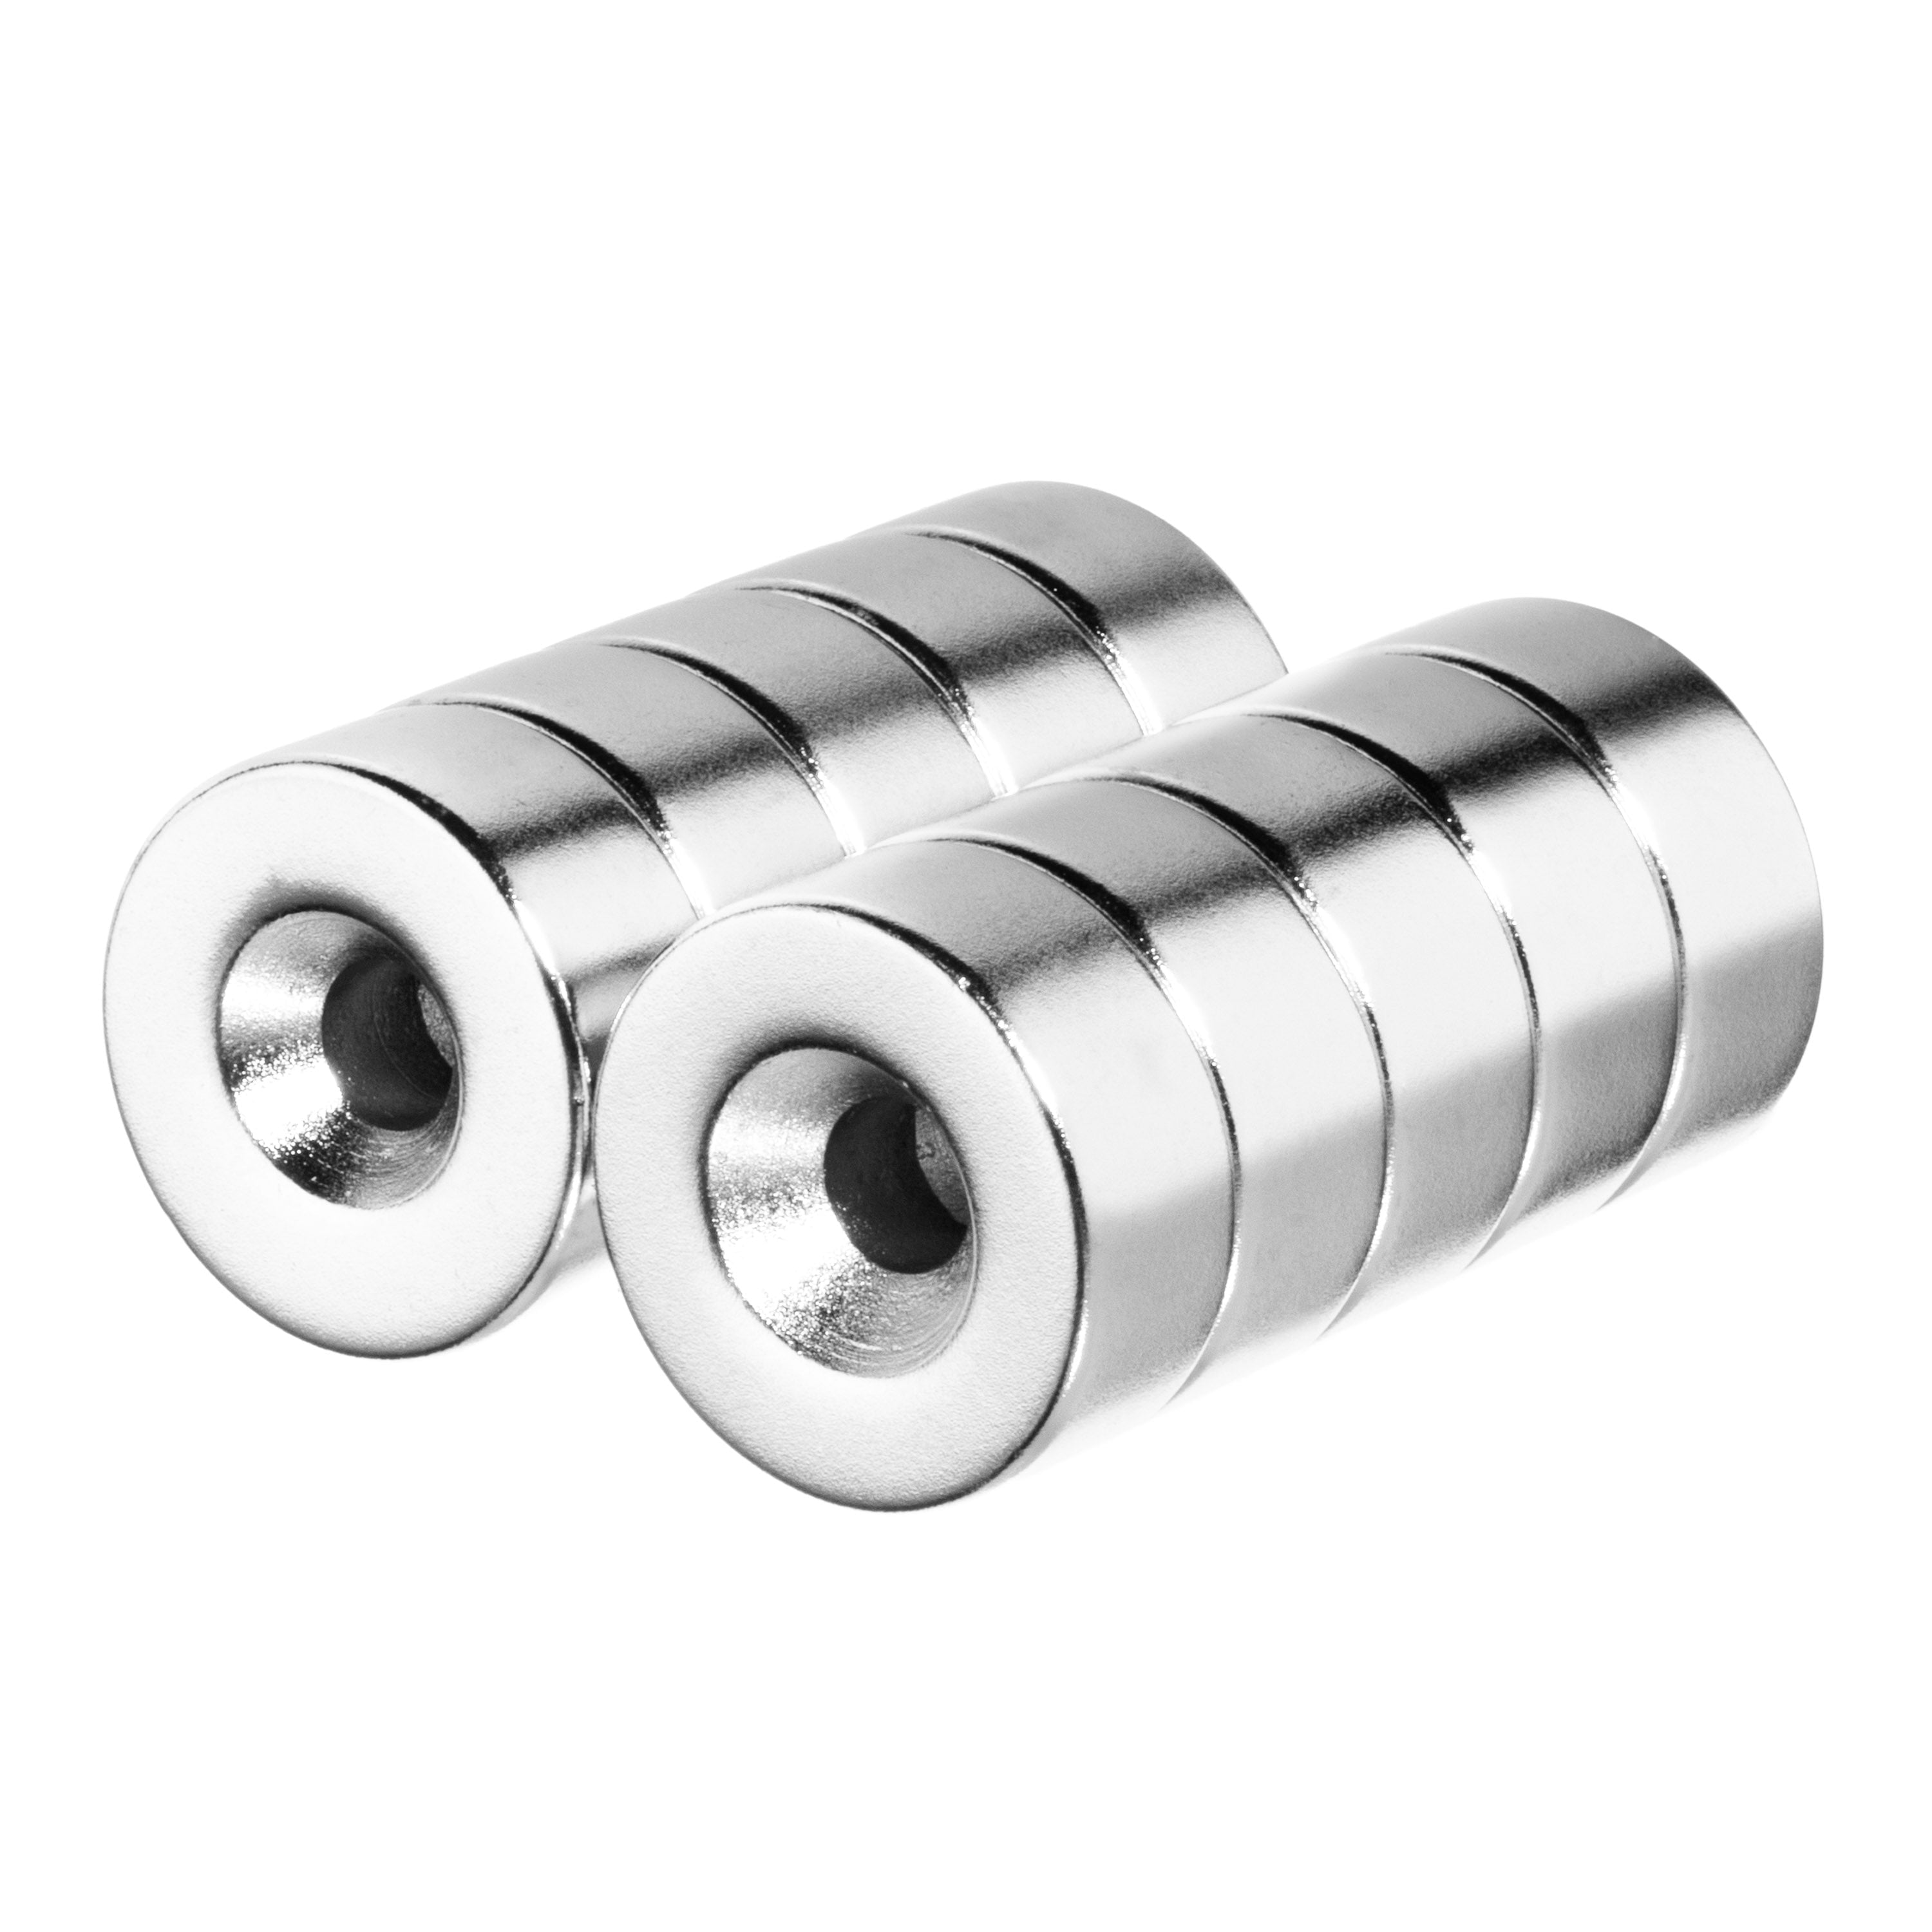 5mmx1mm Neodymium Disc Magnets 5*1 mm 1/5"x1/24" Fridge Magnets 5x1 mm 